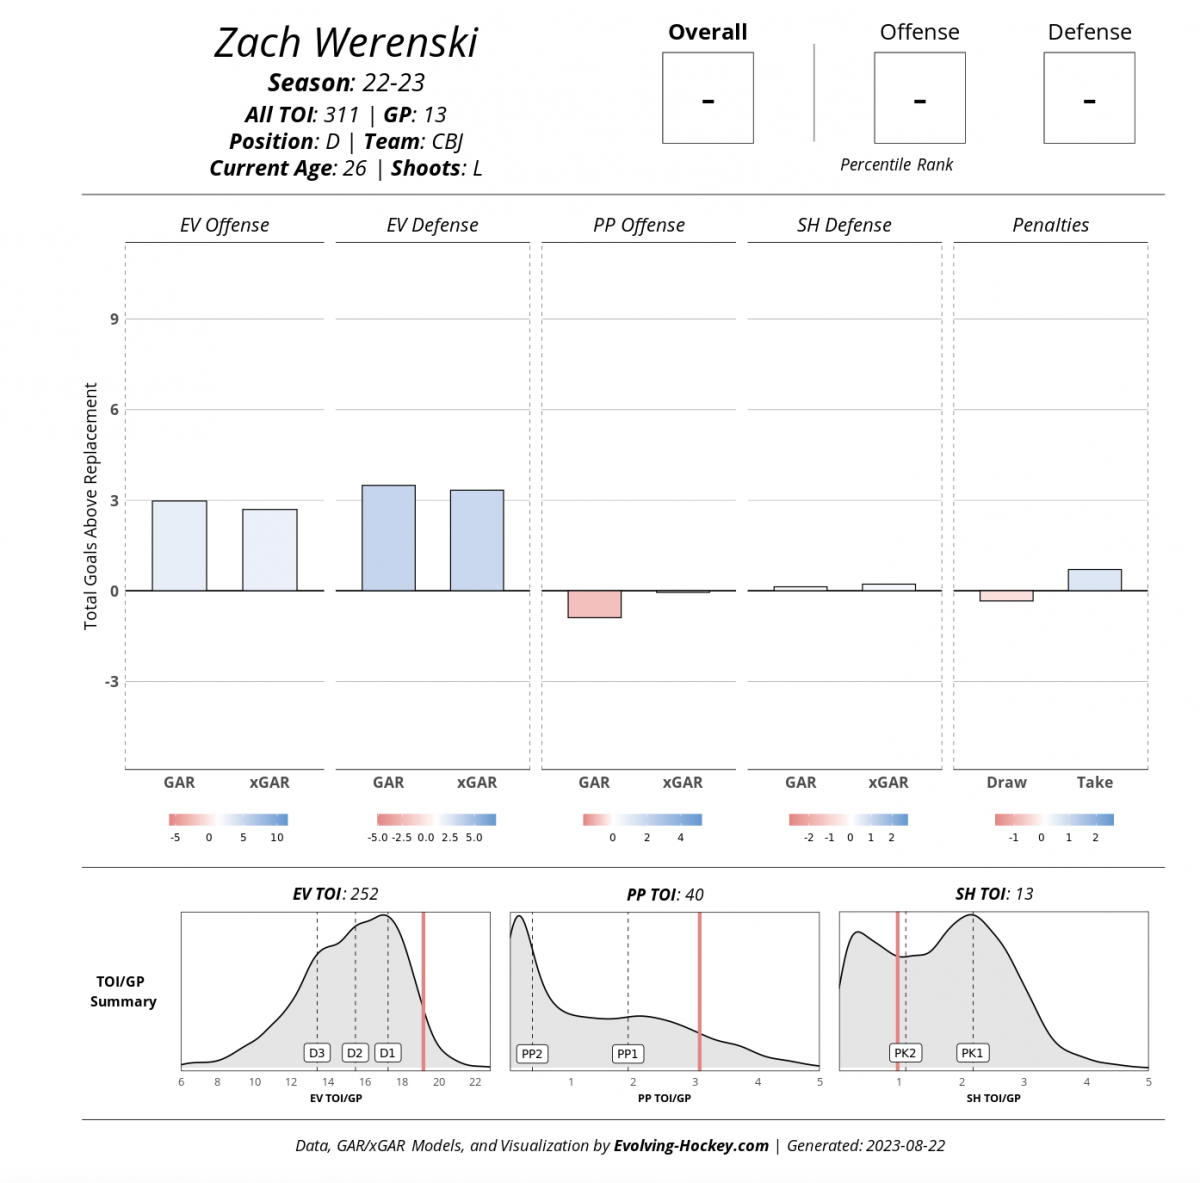 Zach Werenski, Evolving-Hockey.com